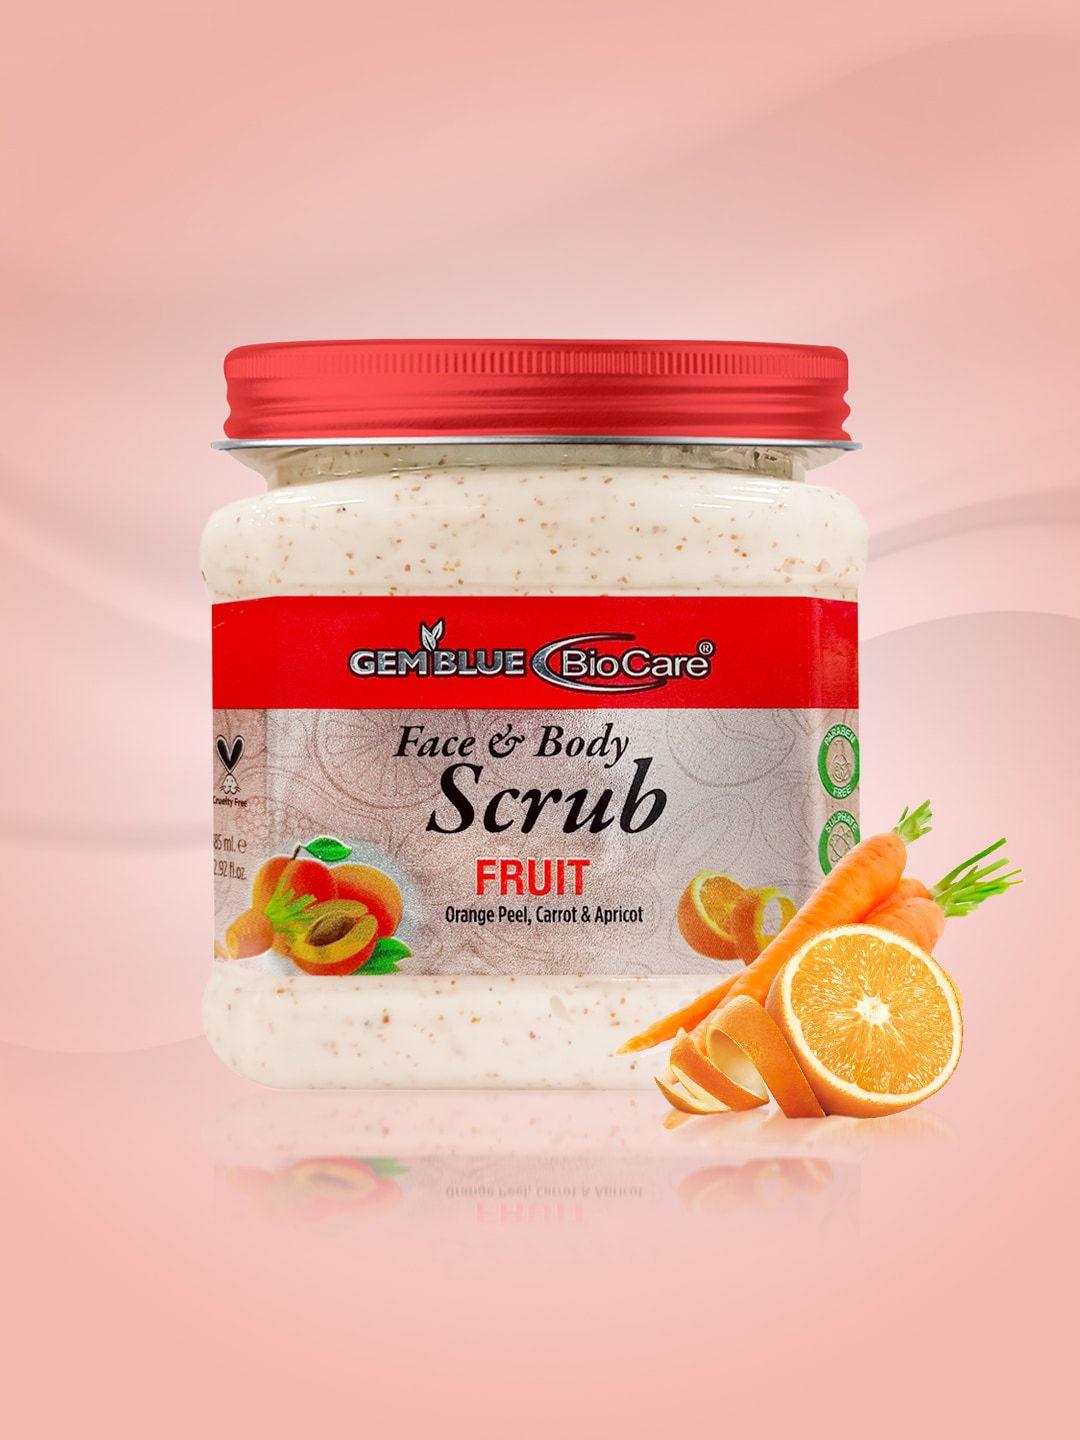 gemblue biocare paraben free fruit face & body scrub with orange peel & carrot - 385 ml